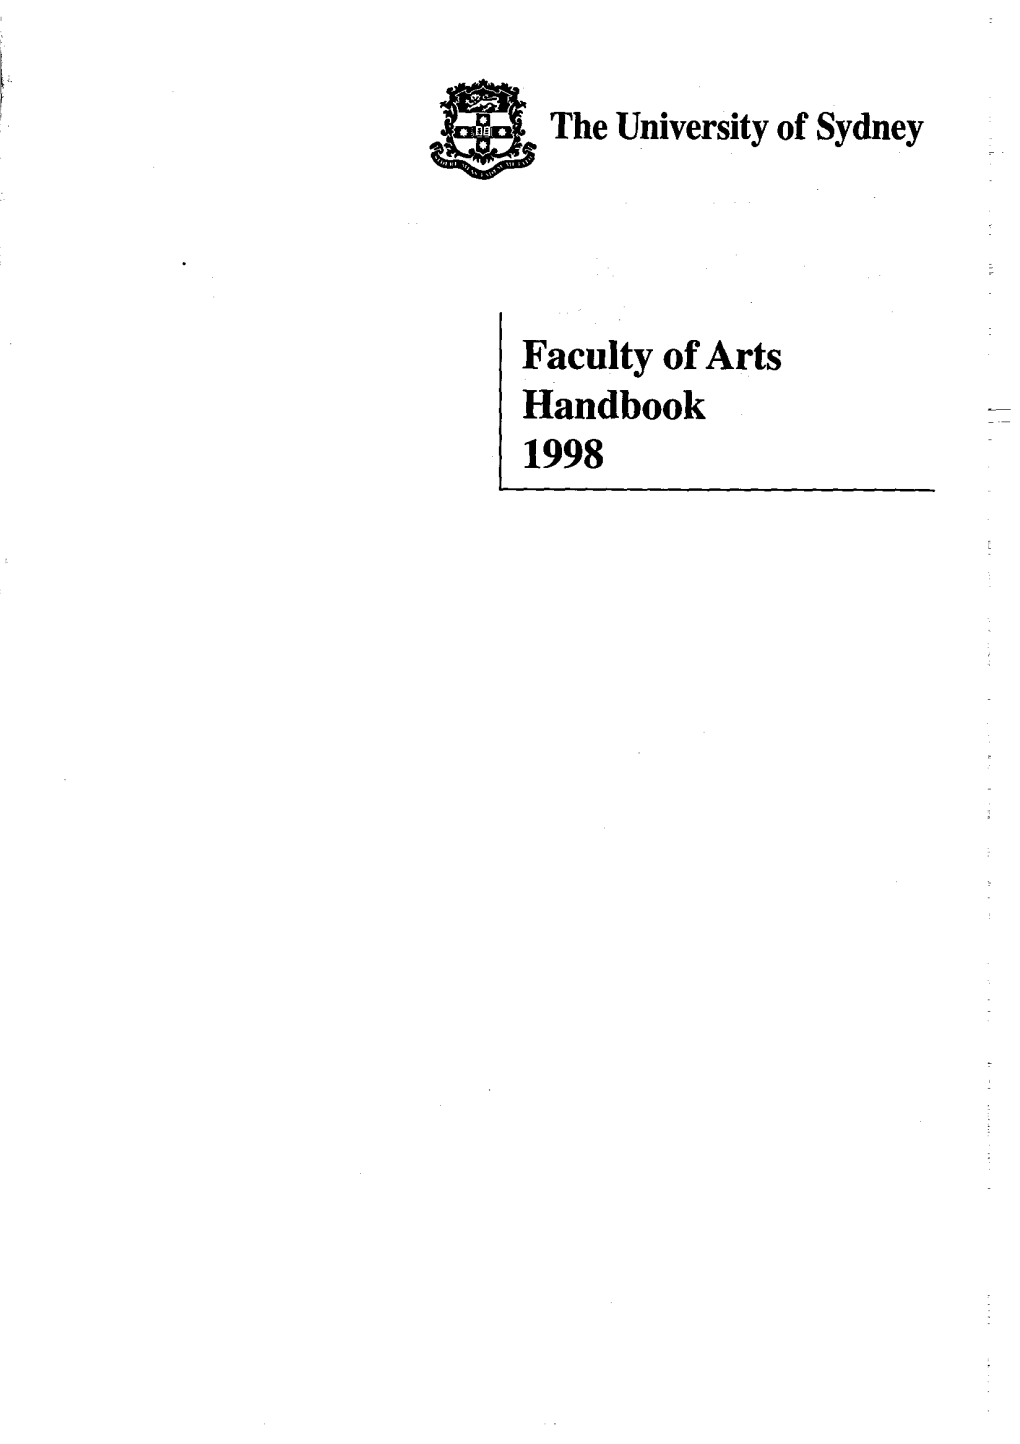 The University of Sydney Faculty of Arts Handbook 1998